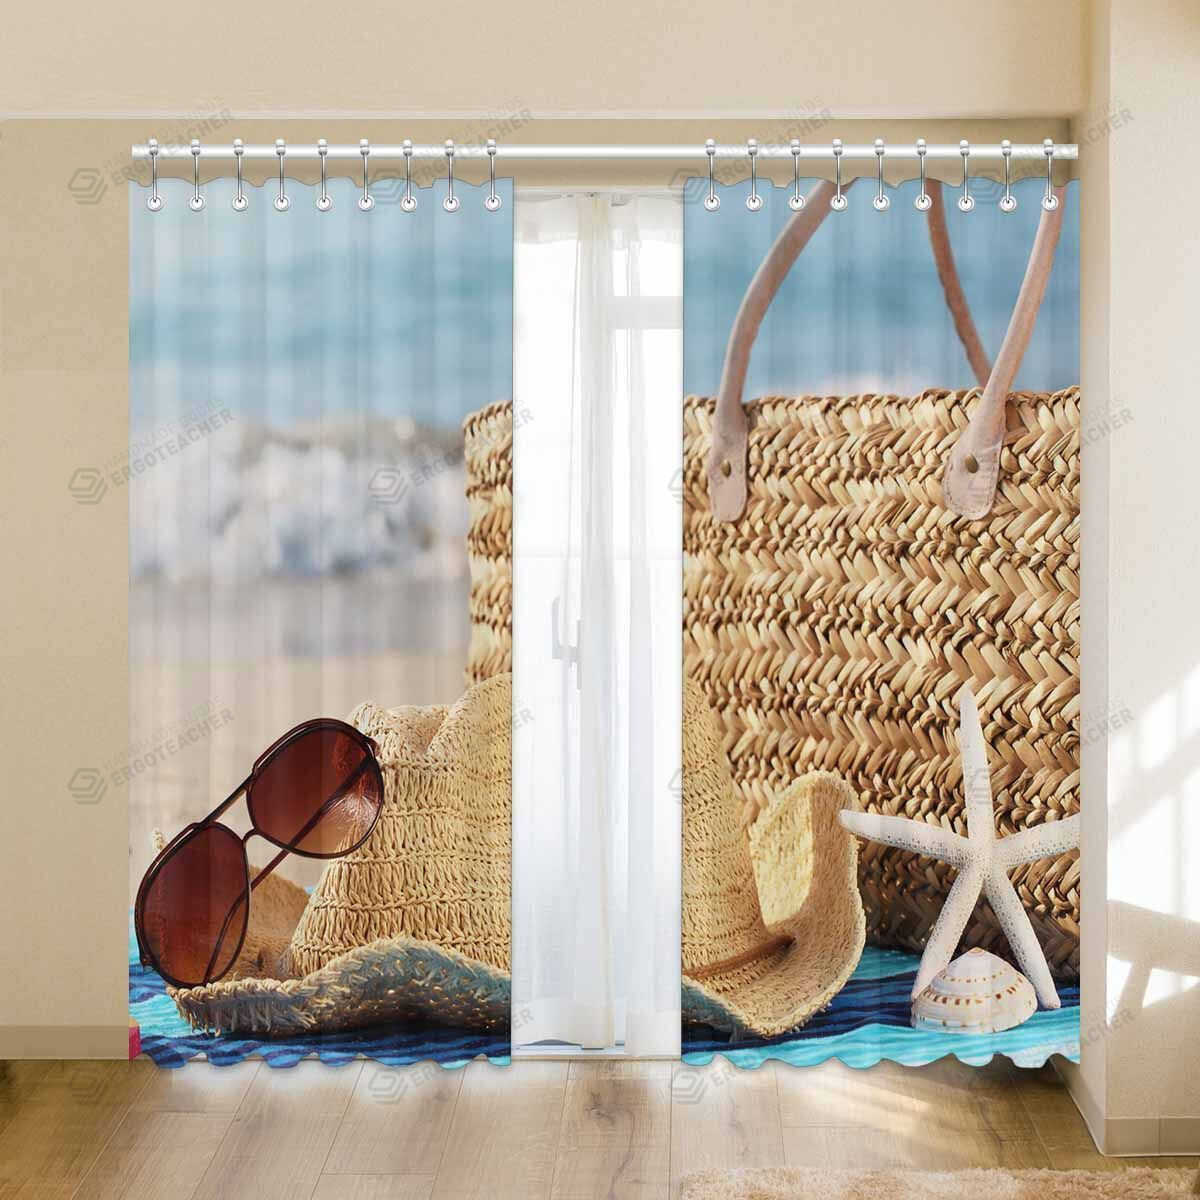 Summer Vacation At Beach Printed Window Curtains